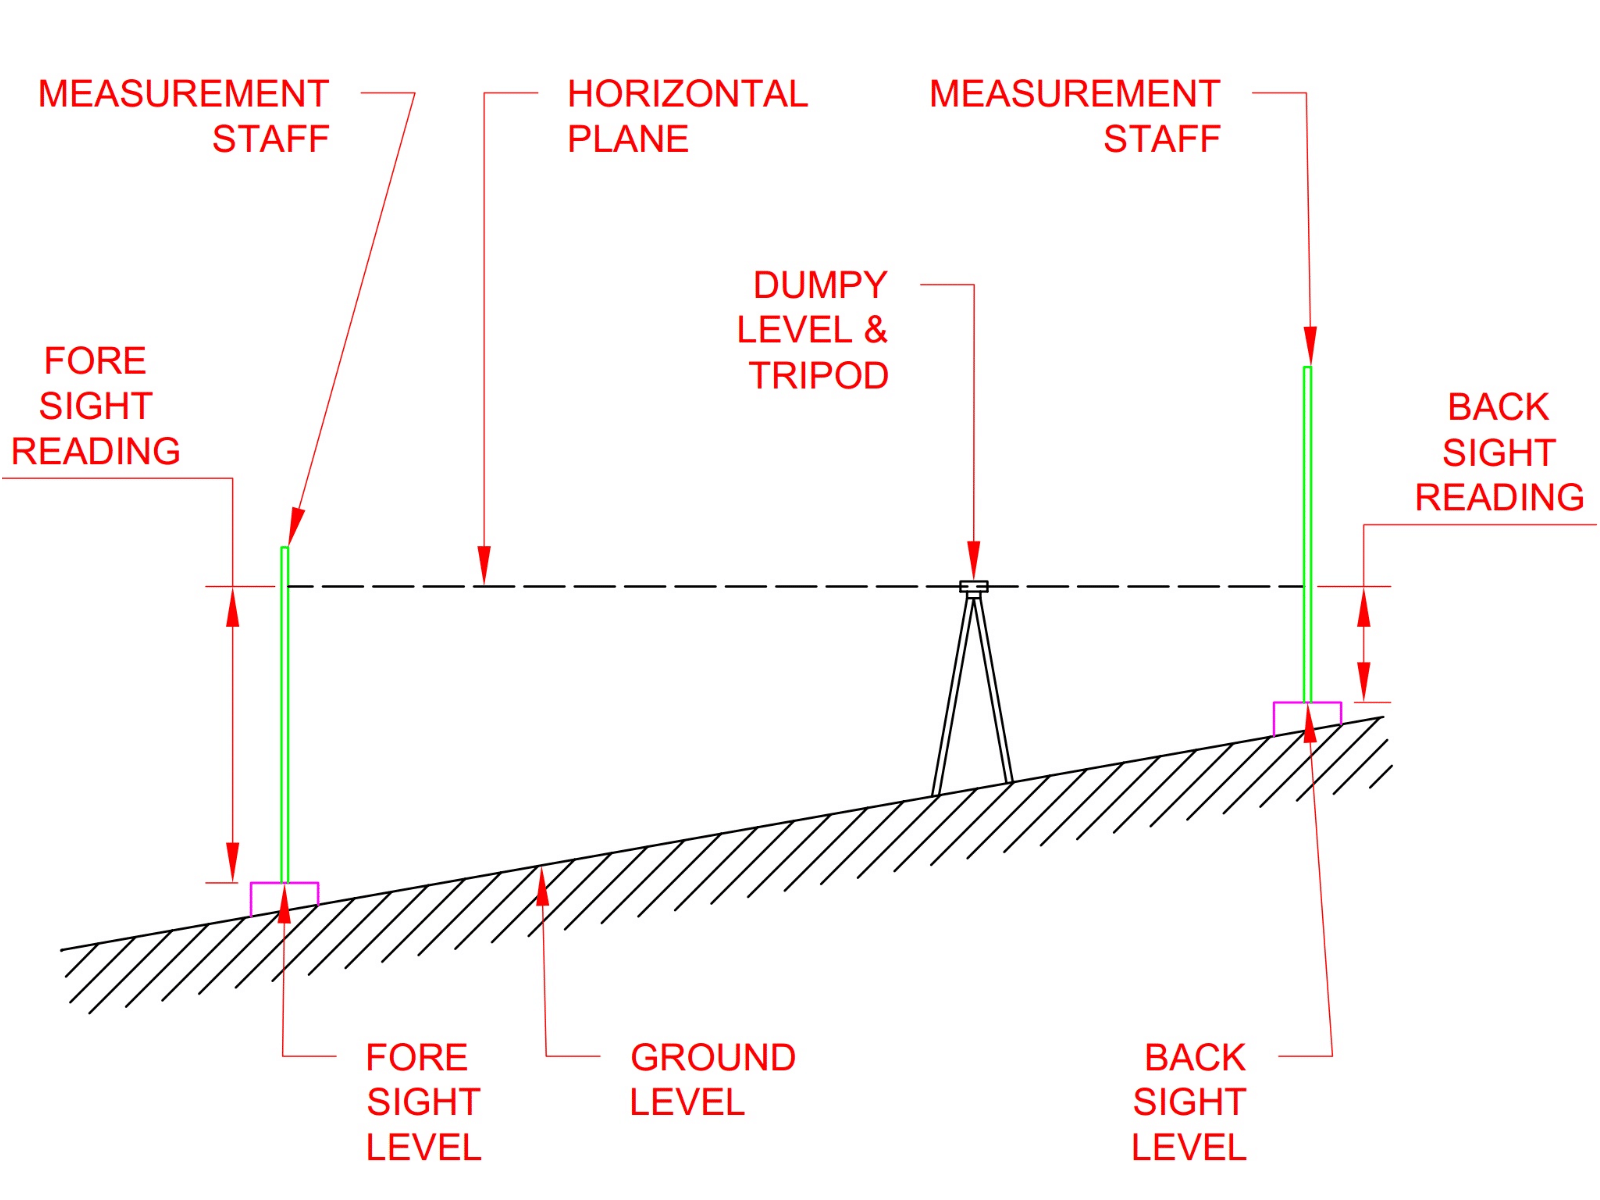 Dumpy level surveying principles diagram